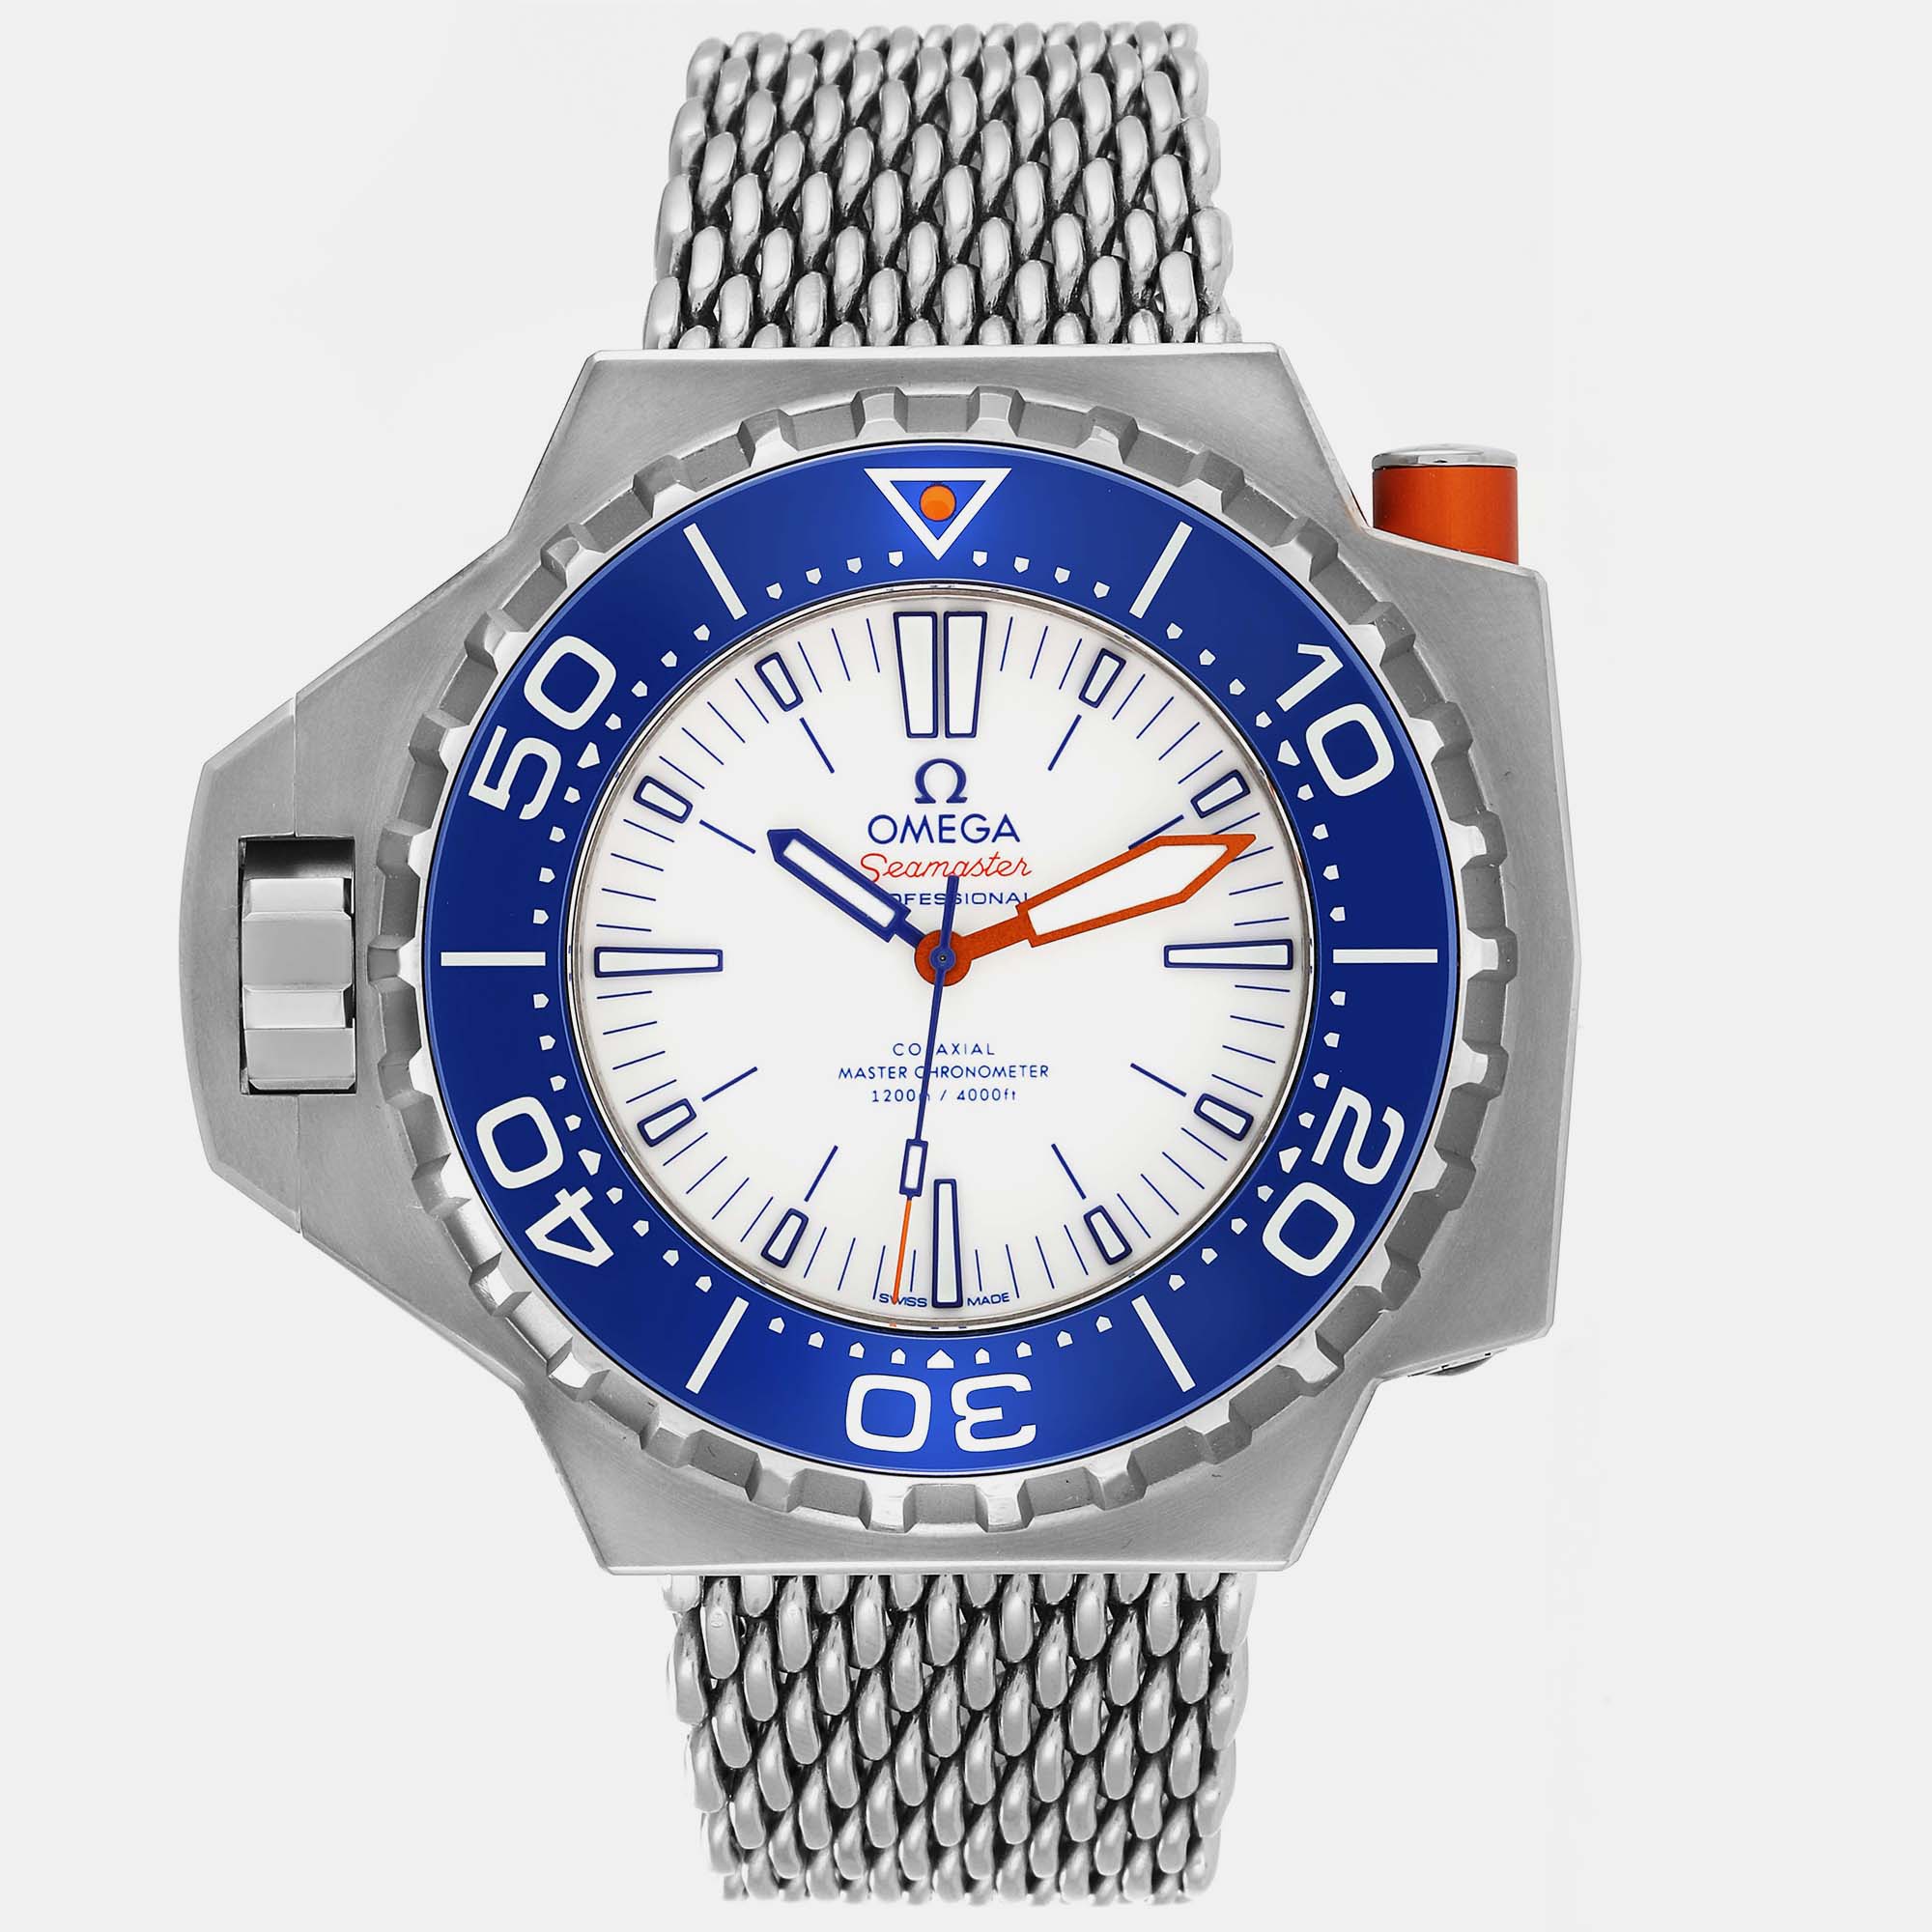 Omega white titanium seamaster 227.90.55.21.04.001 automatic men's wristwatch 48 mm